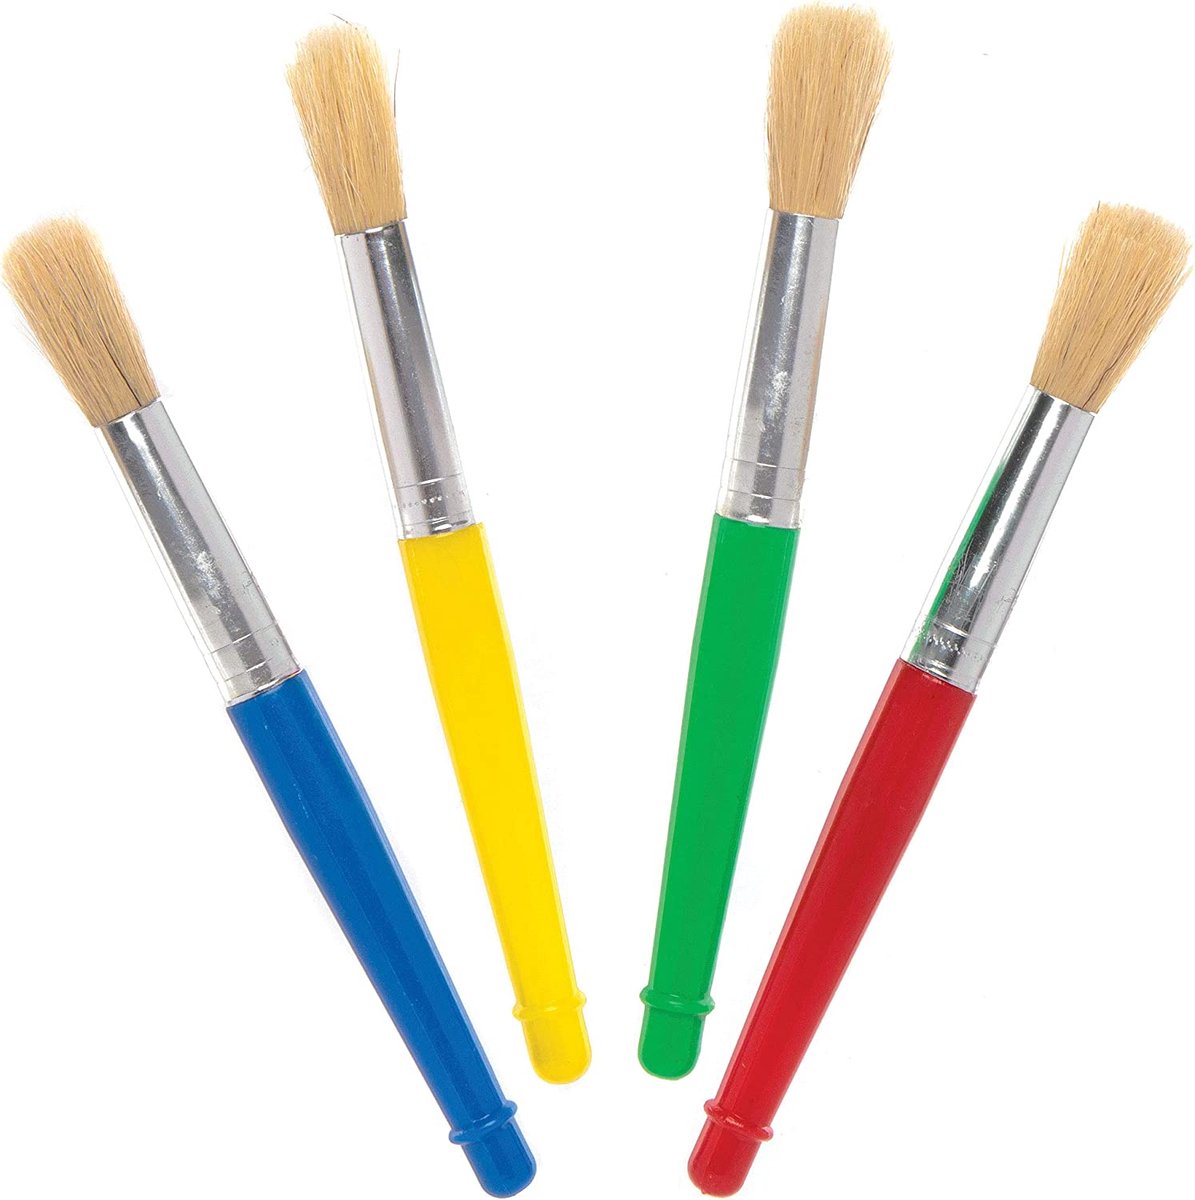 Verf Kwasten - verfroller - Acrylverven -aint brush roll - paint stuff - Verf Borstels Set - Paint Brushes Set 12